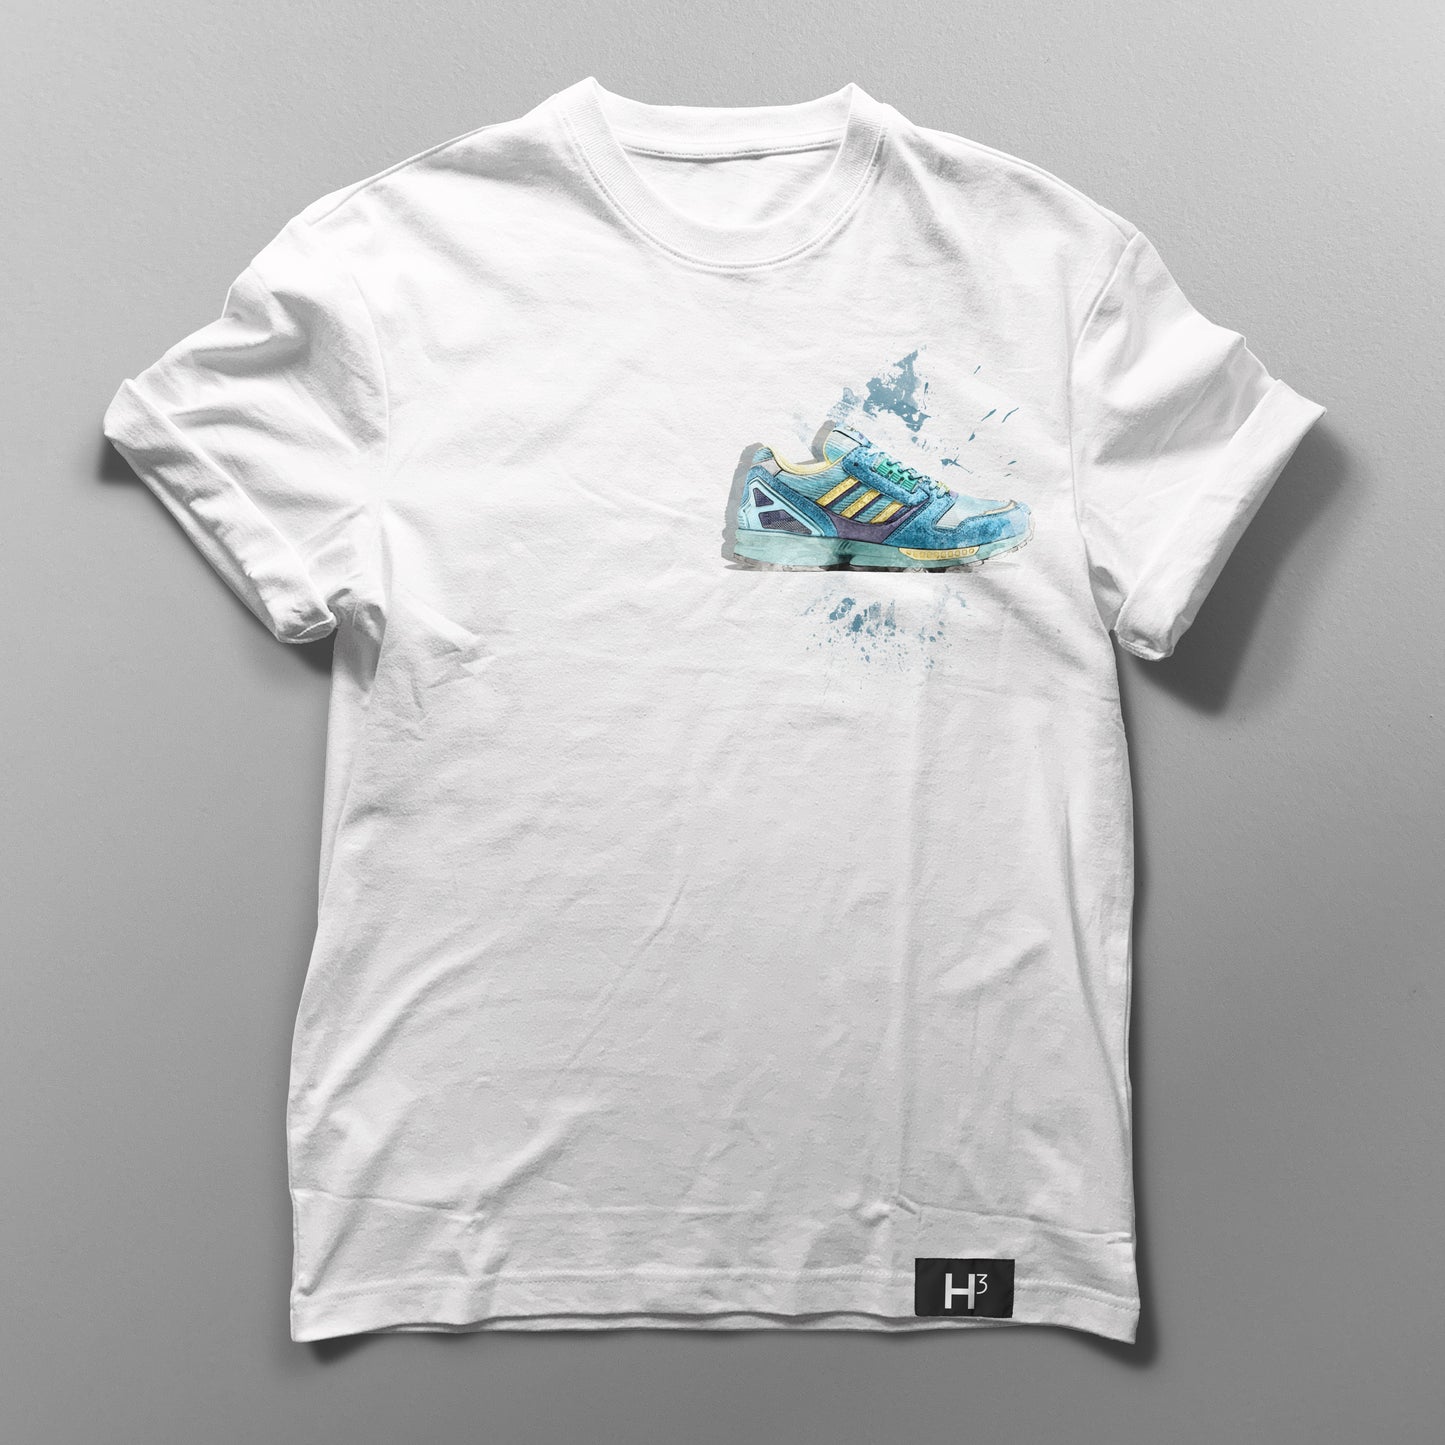 T-Shirt "Aqua 2019" white - Small